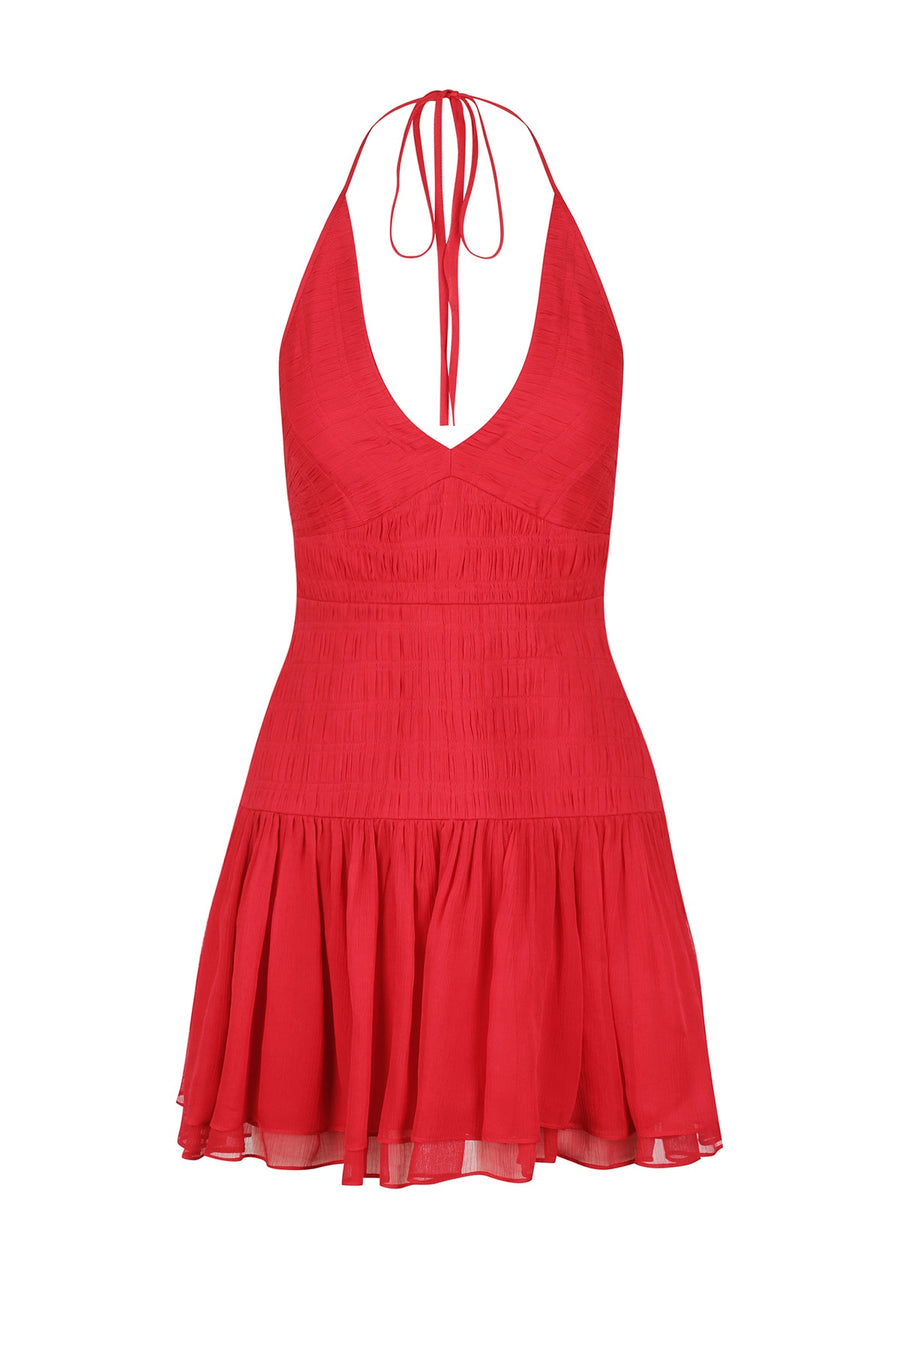 Shona Joy Marquis Ruched Tie Back Mini Dress Roma Red